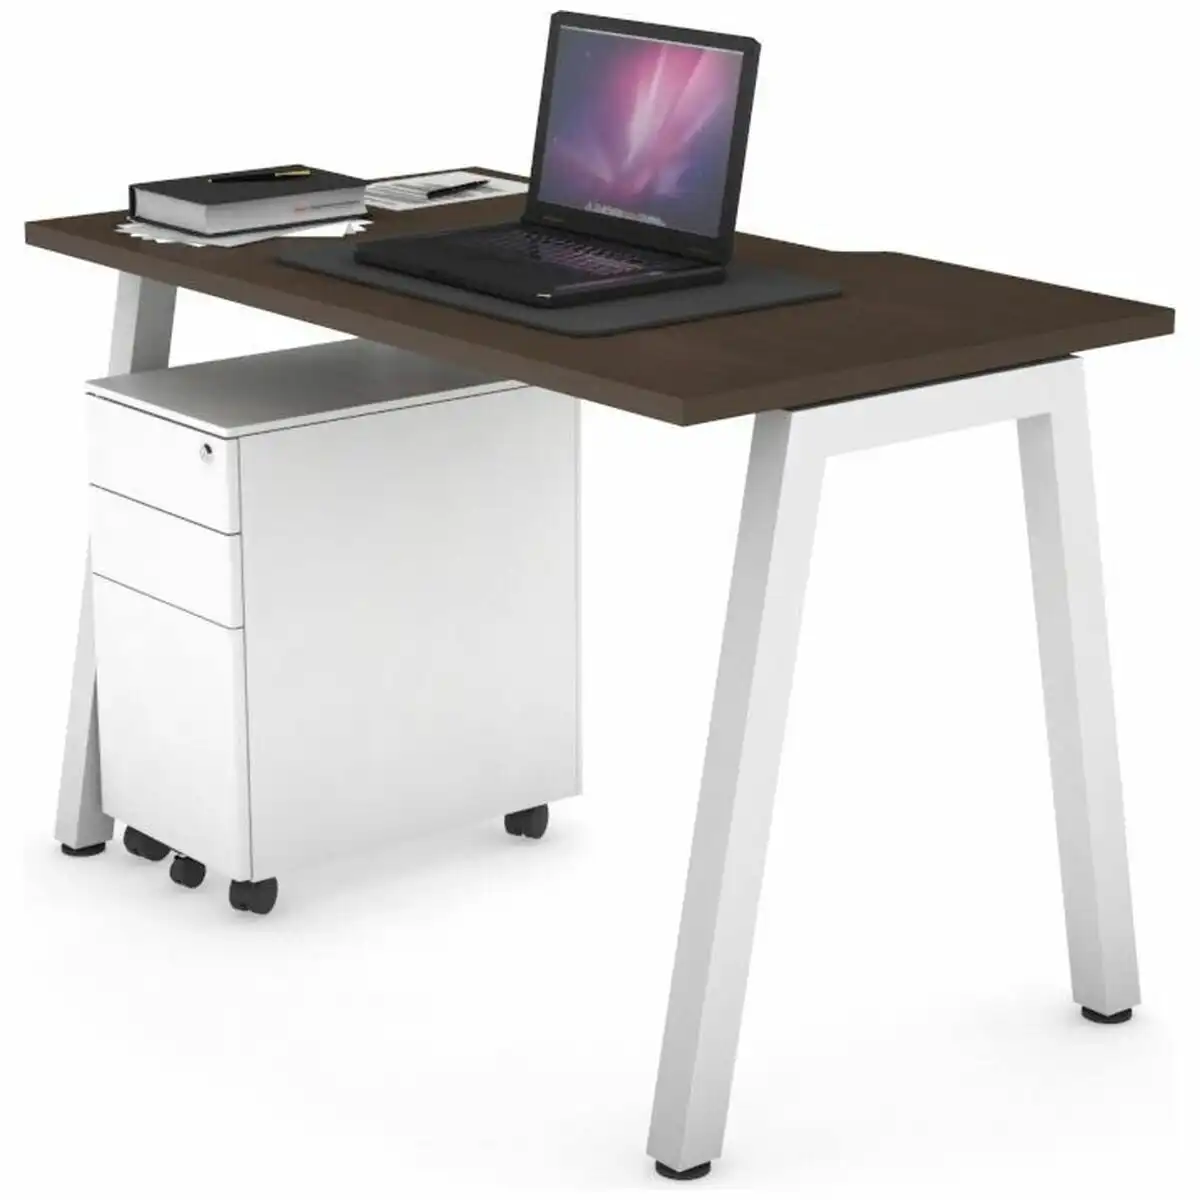 Jason.L 1000 x 600 Quadro A Leg Home Office Desk - Wenge